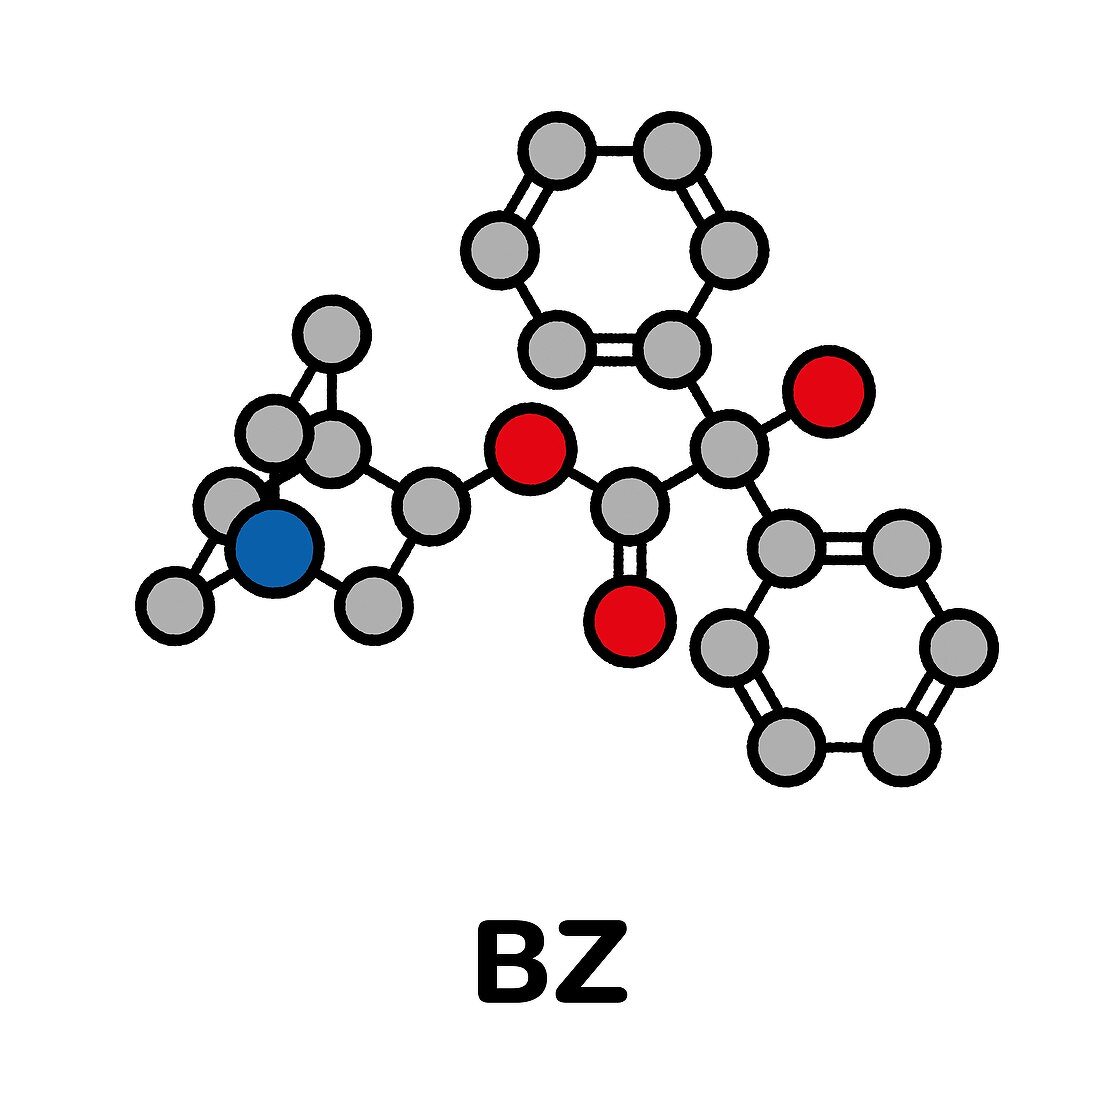 3-Quinuclidinyl benzilate incapacitating agent, illustration